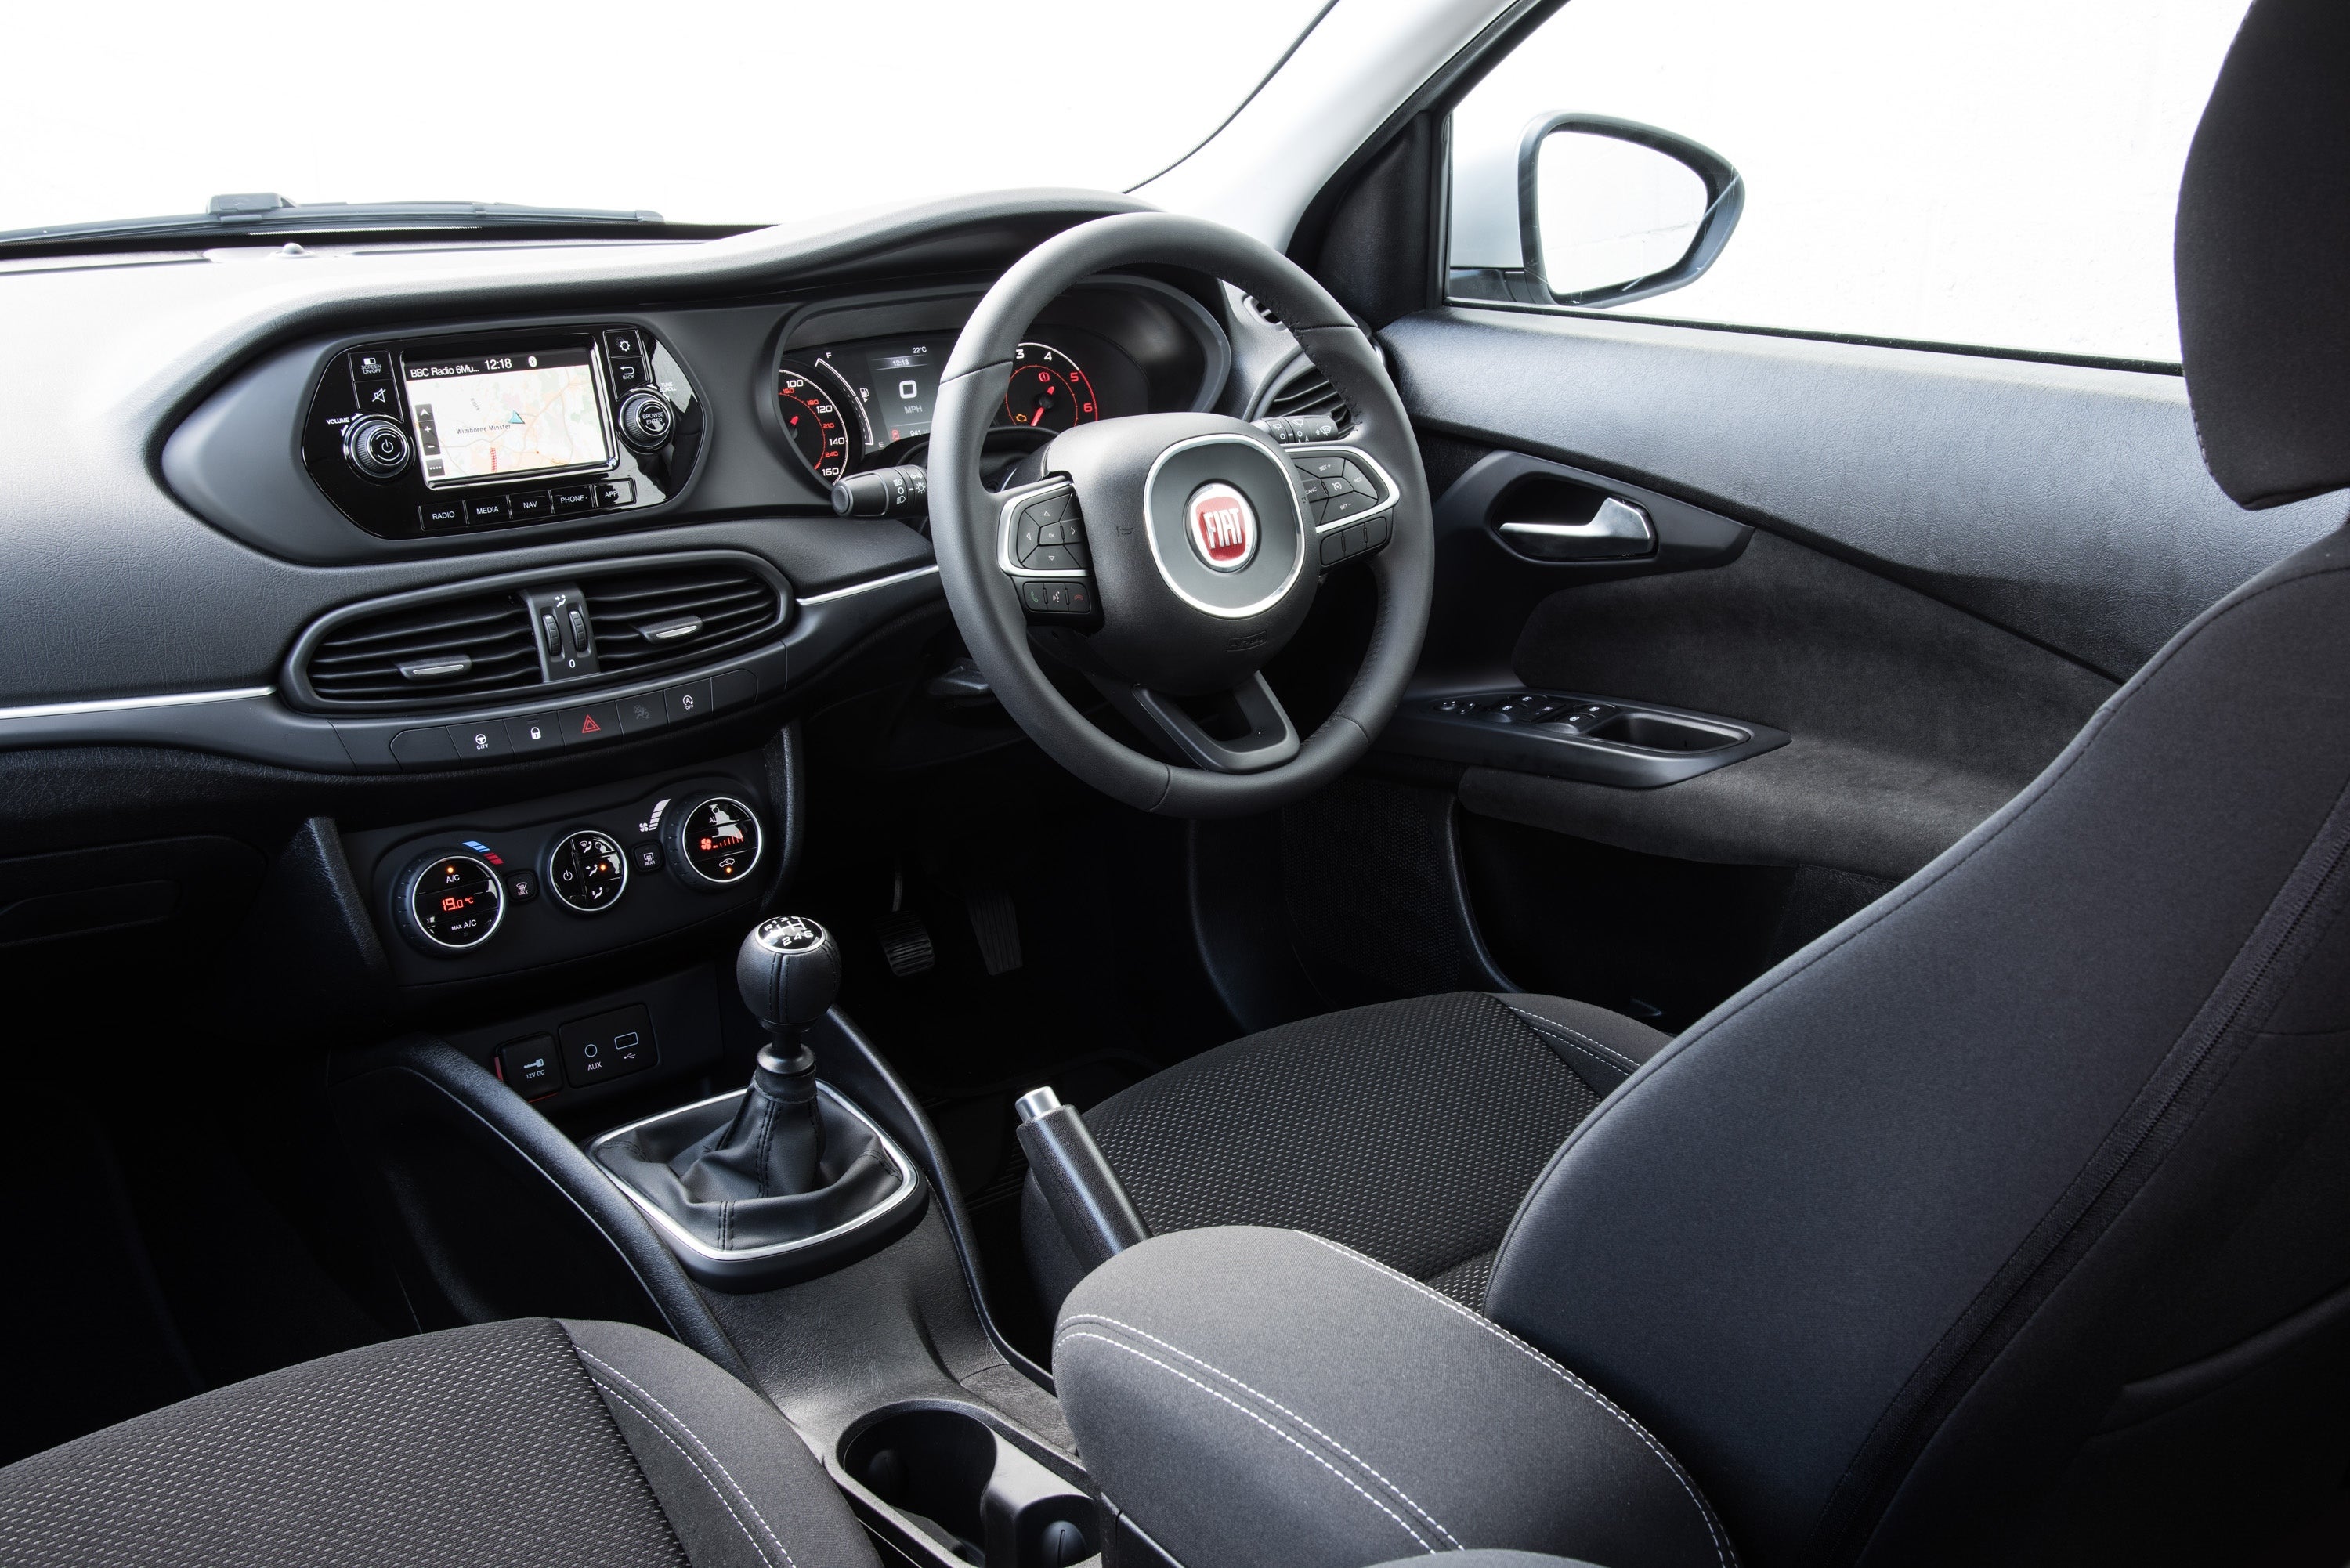  Fiat Tipo Review 2022: Interior 